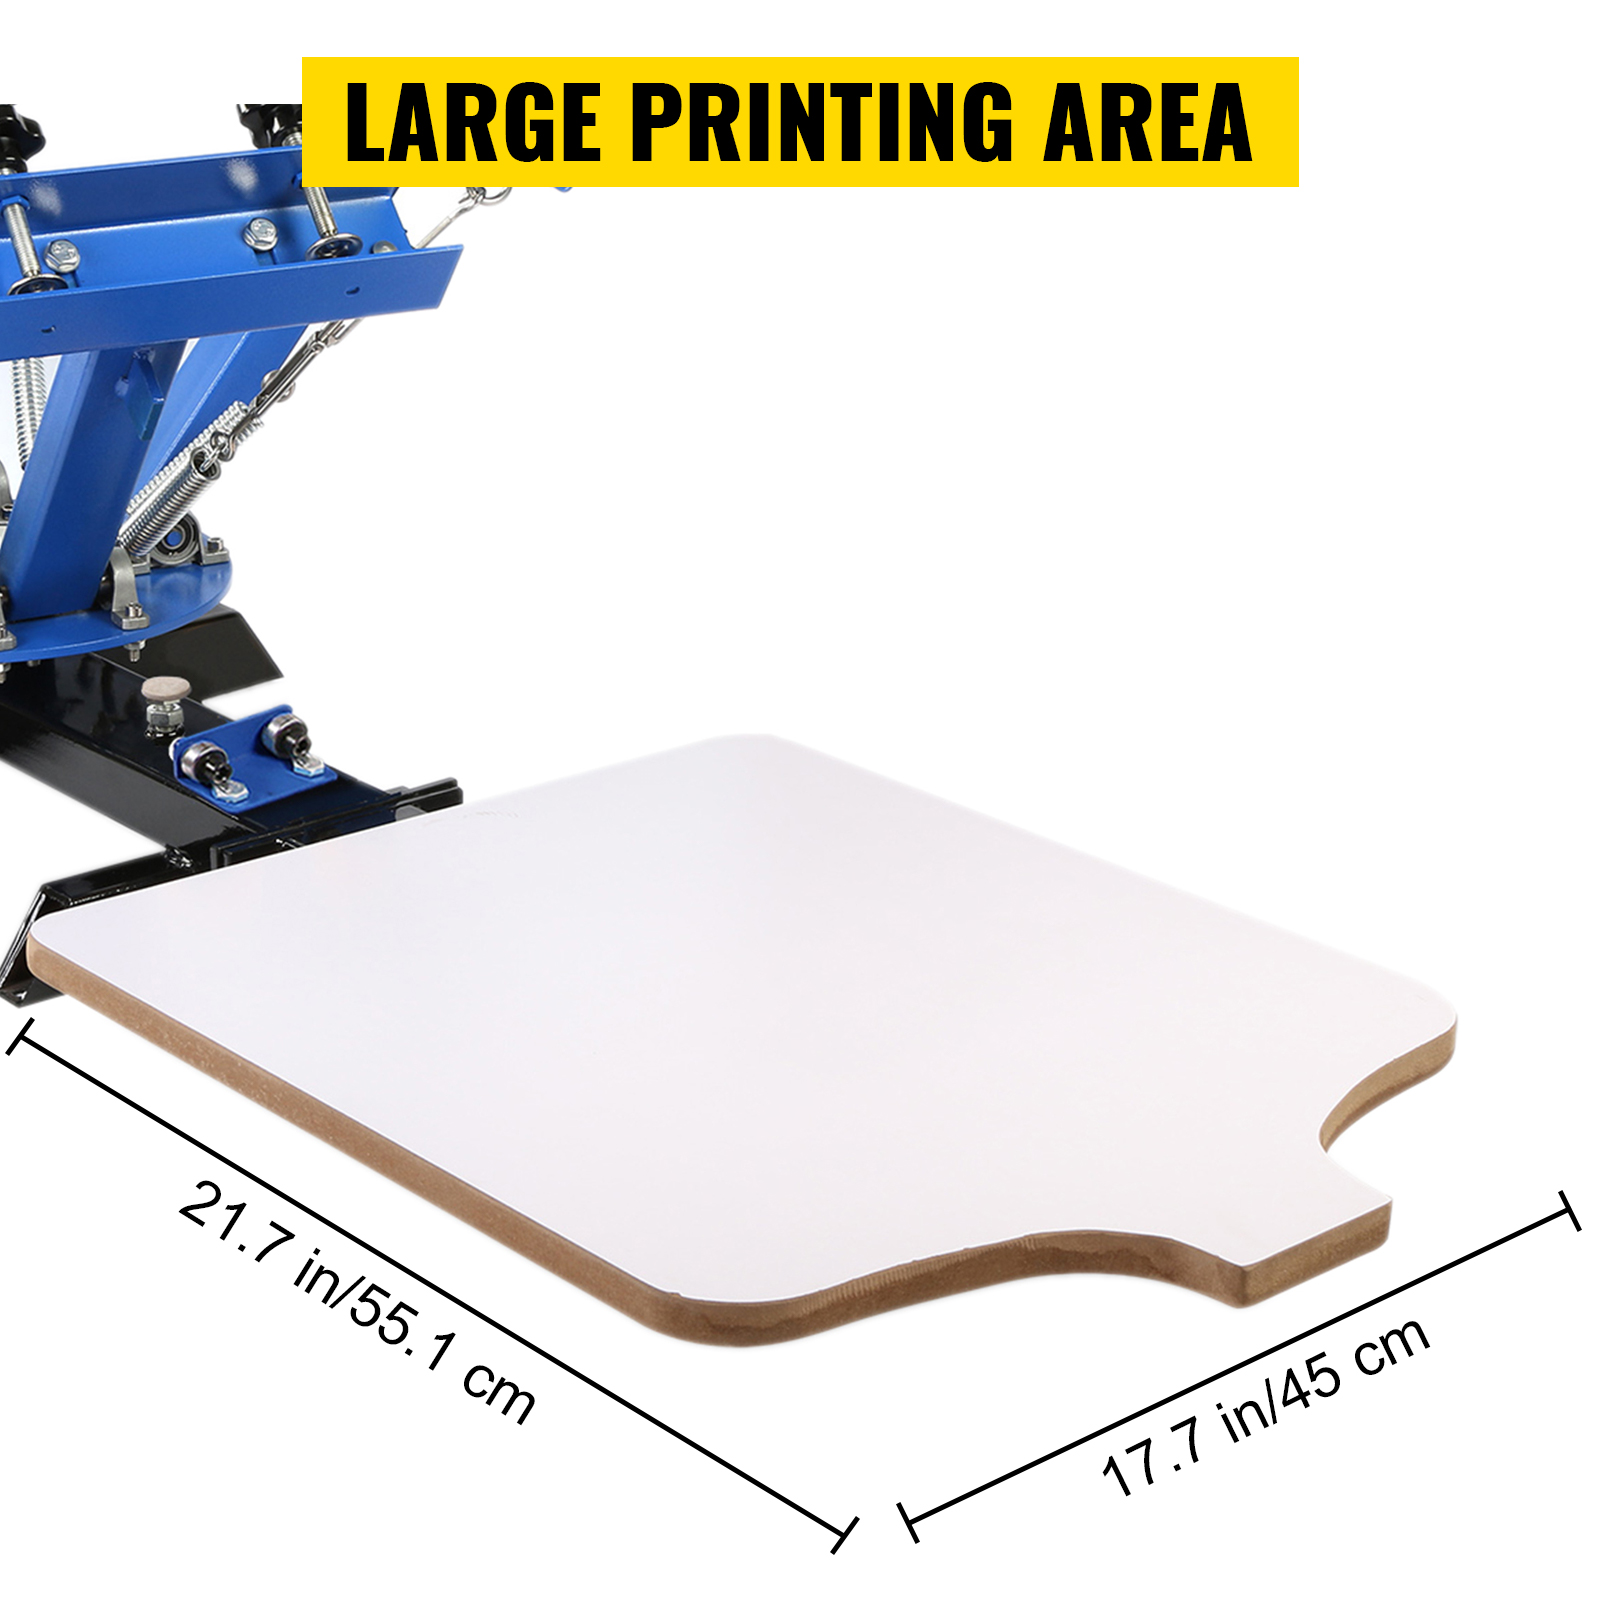 4 Color Screen Printing Press Machine Silk Screening Pressing With 1 Station DIY 886373408311 